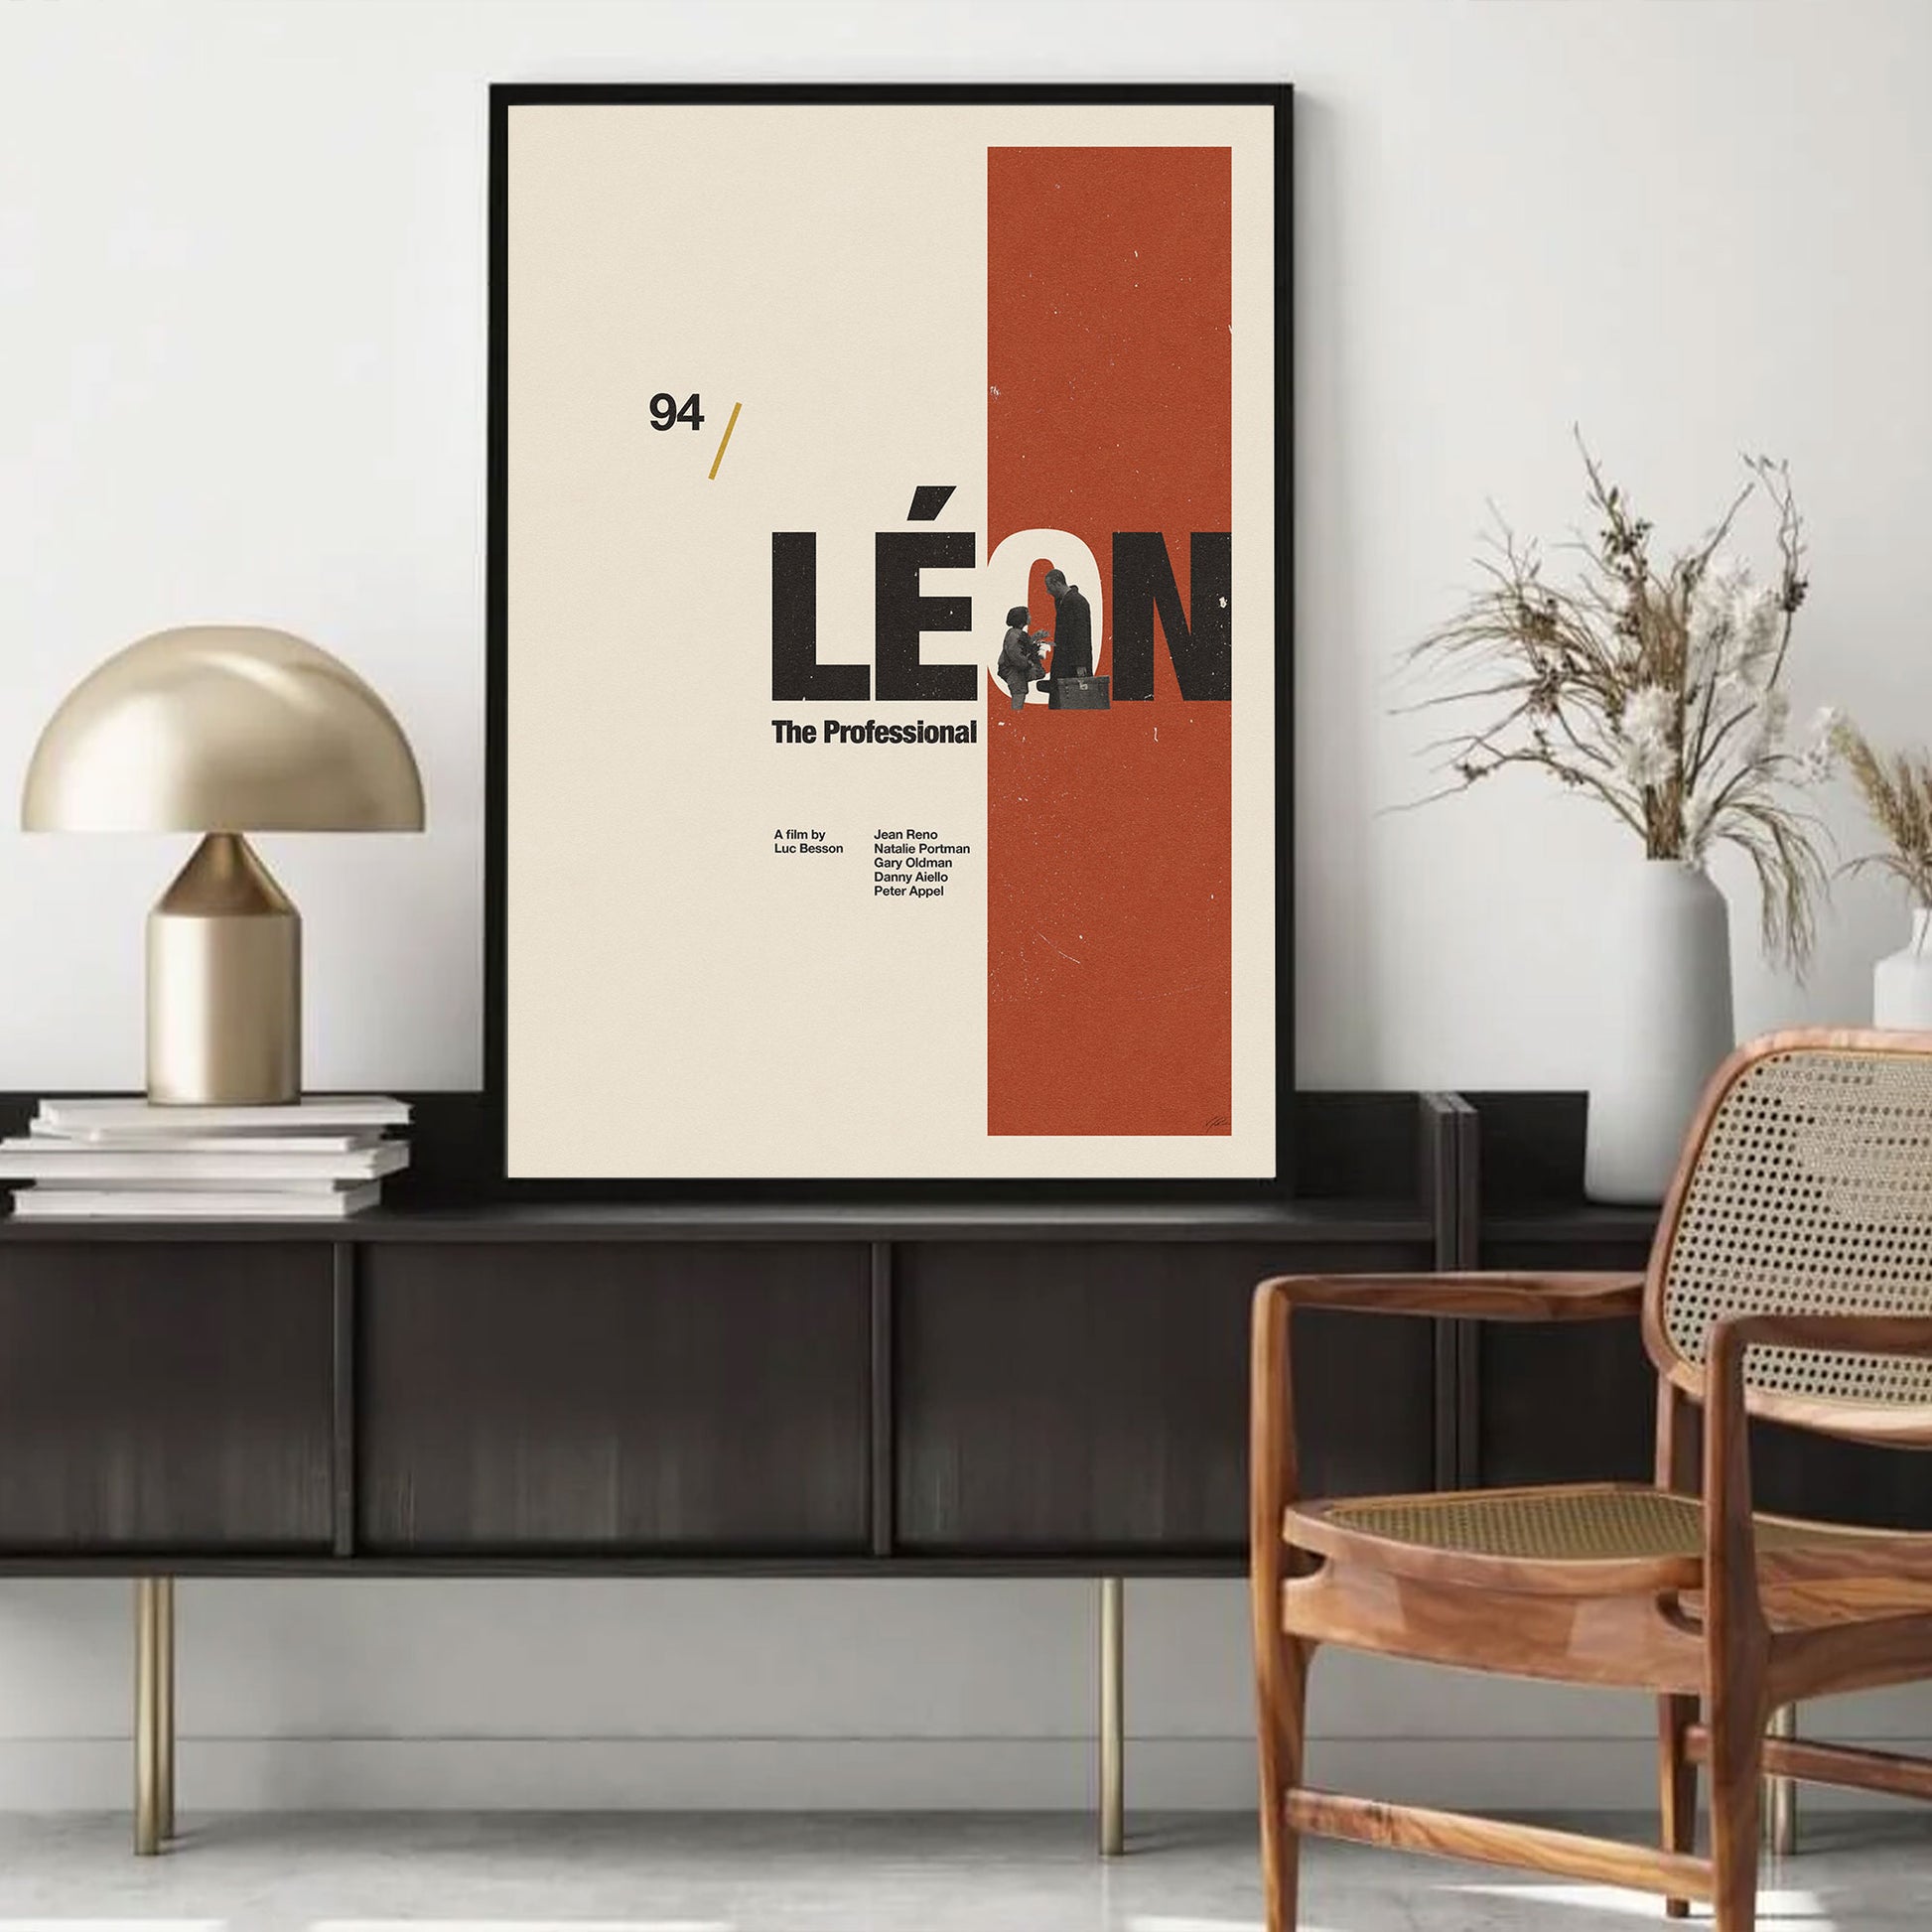 leon the professional poster, mid century mordern, movie poster, orange, swiss, helvetica, natalie portman